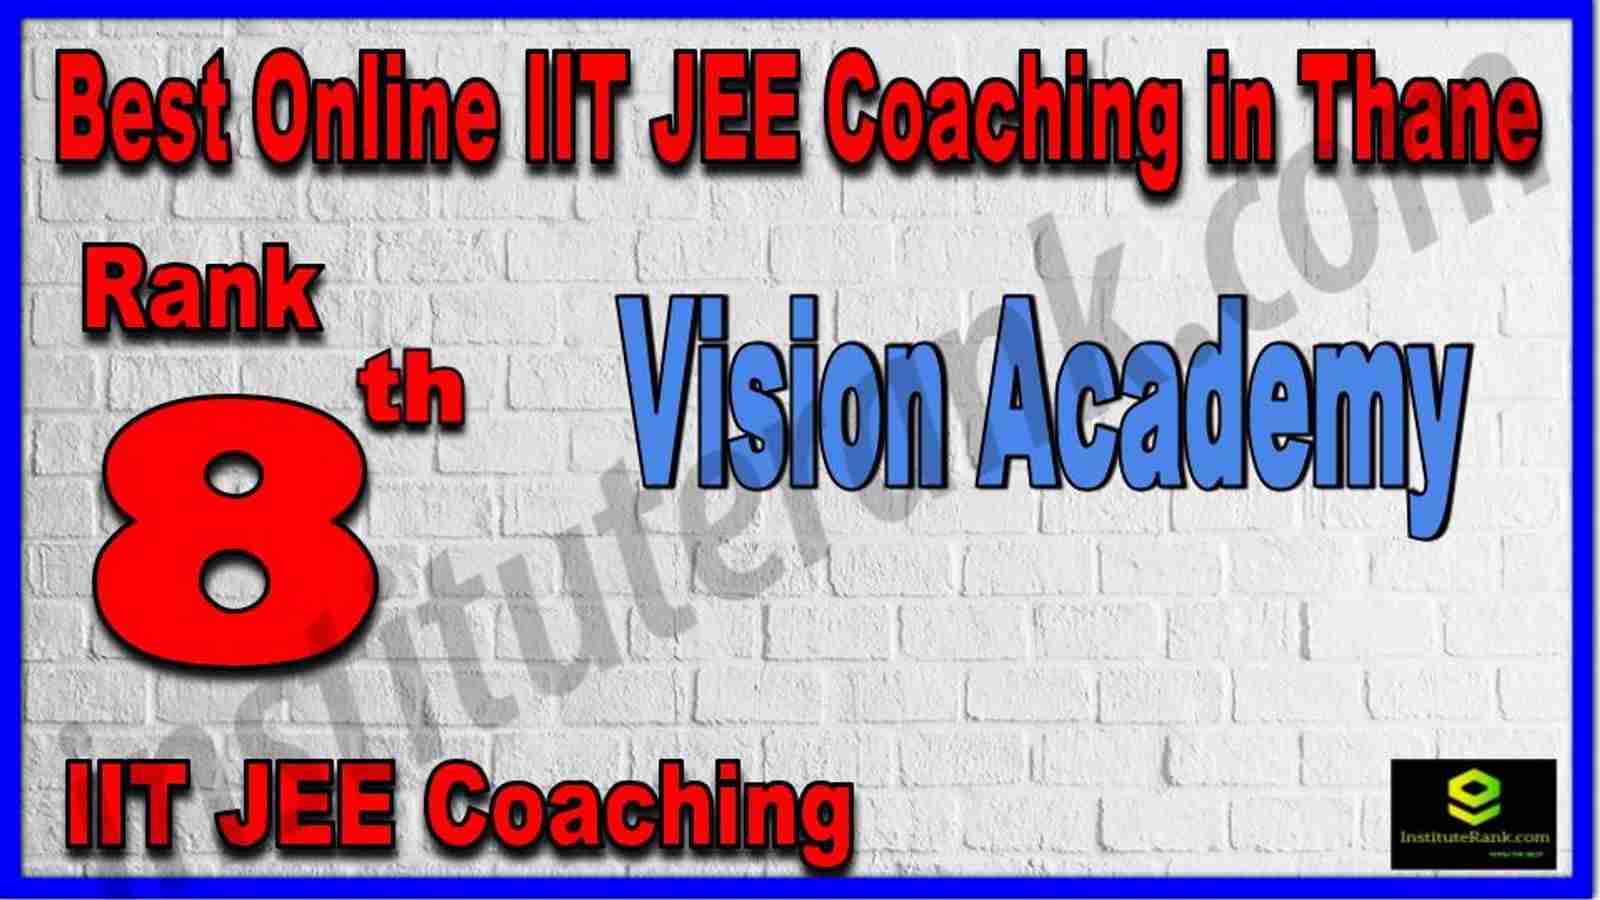 Rank 8th Best Online IIT JEE Coaching in Thane